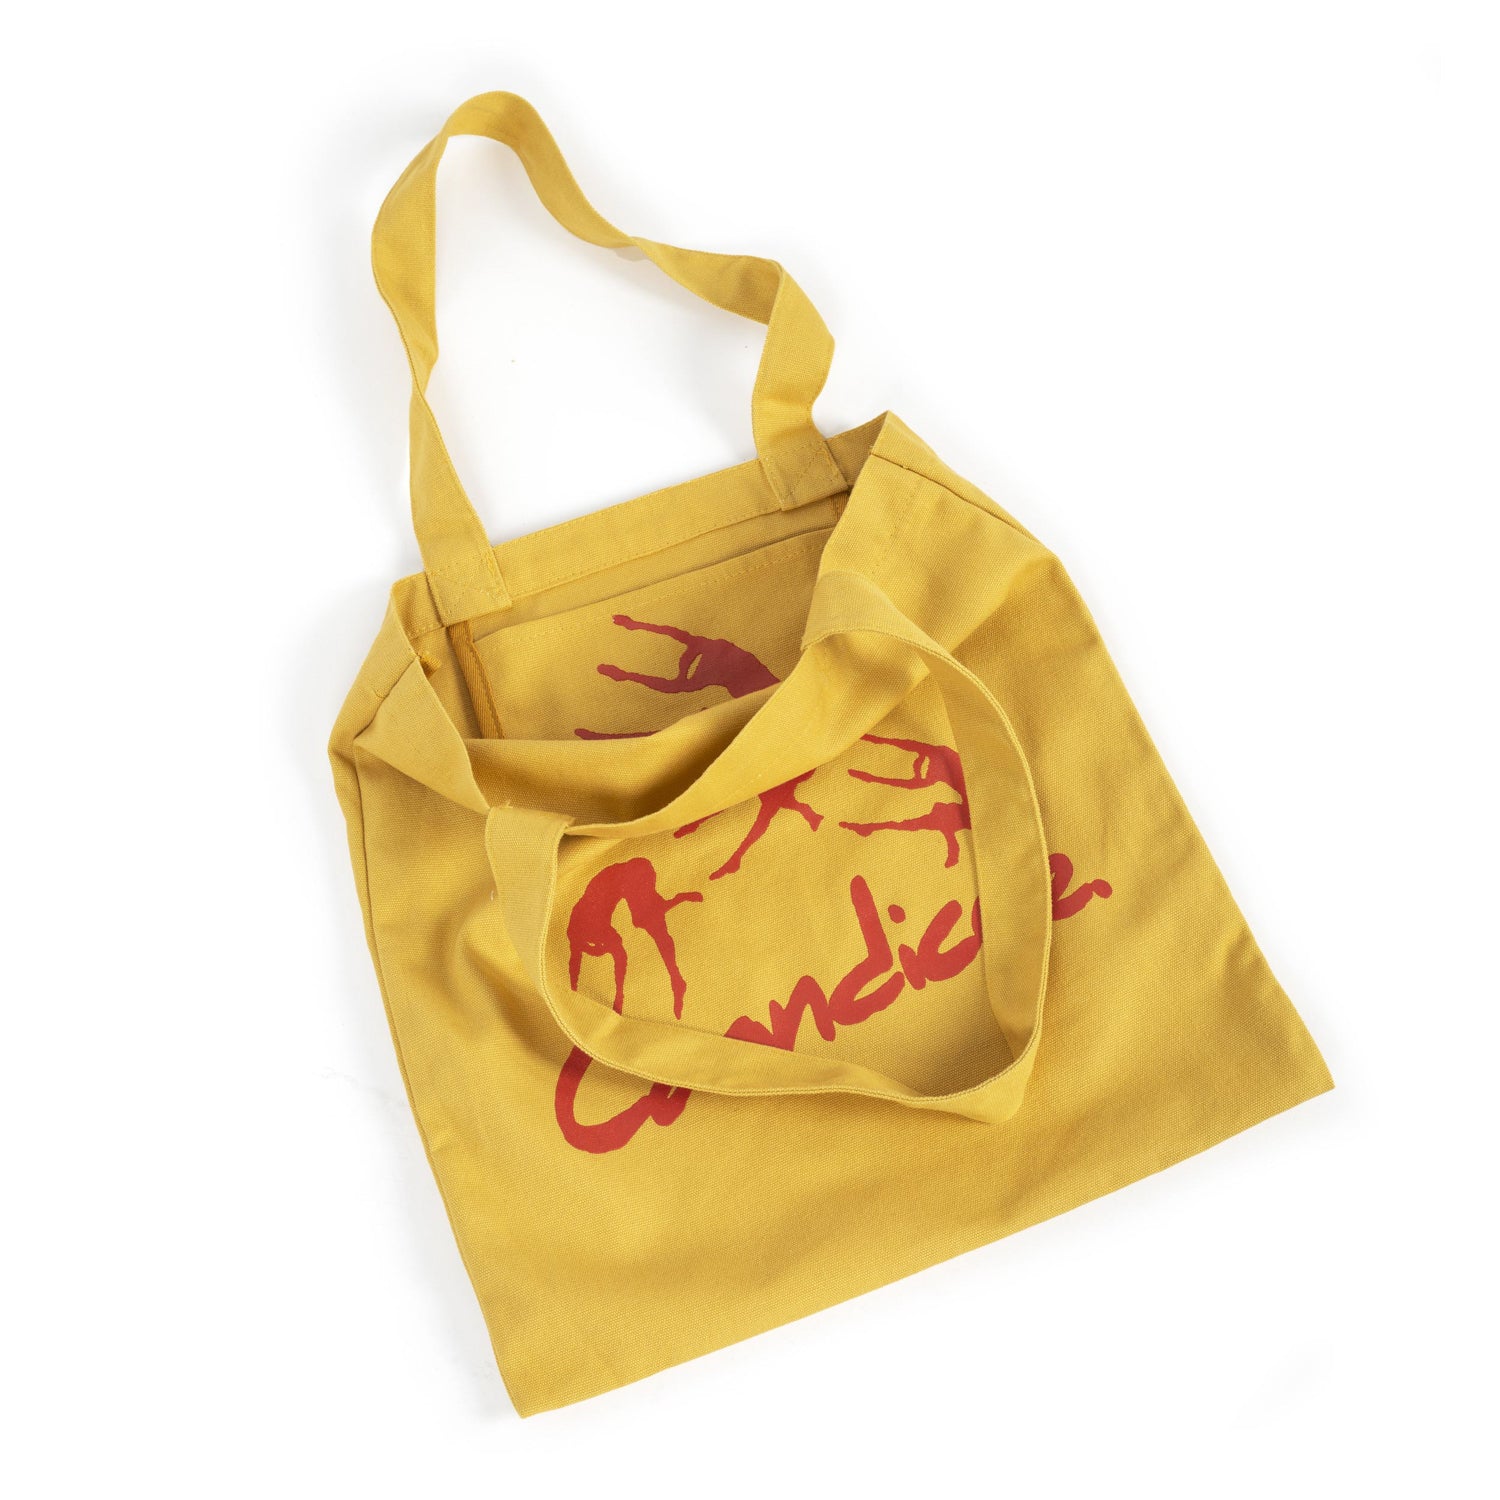 Caandicee Tote Bag, Yellow